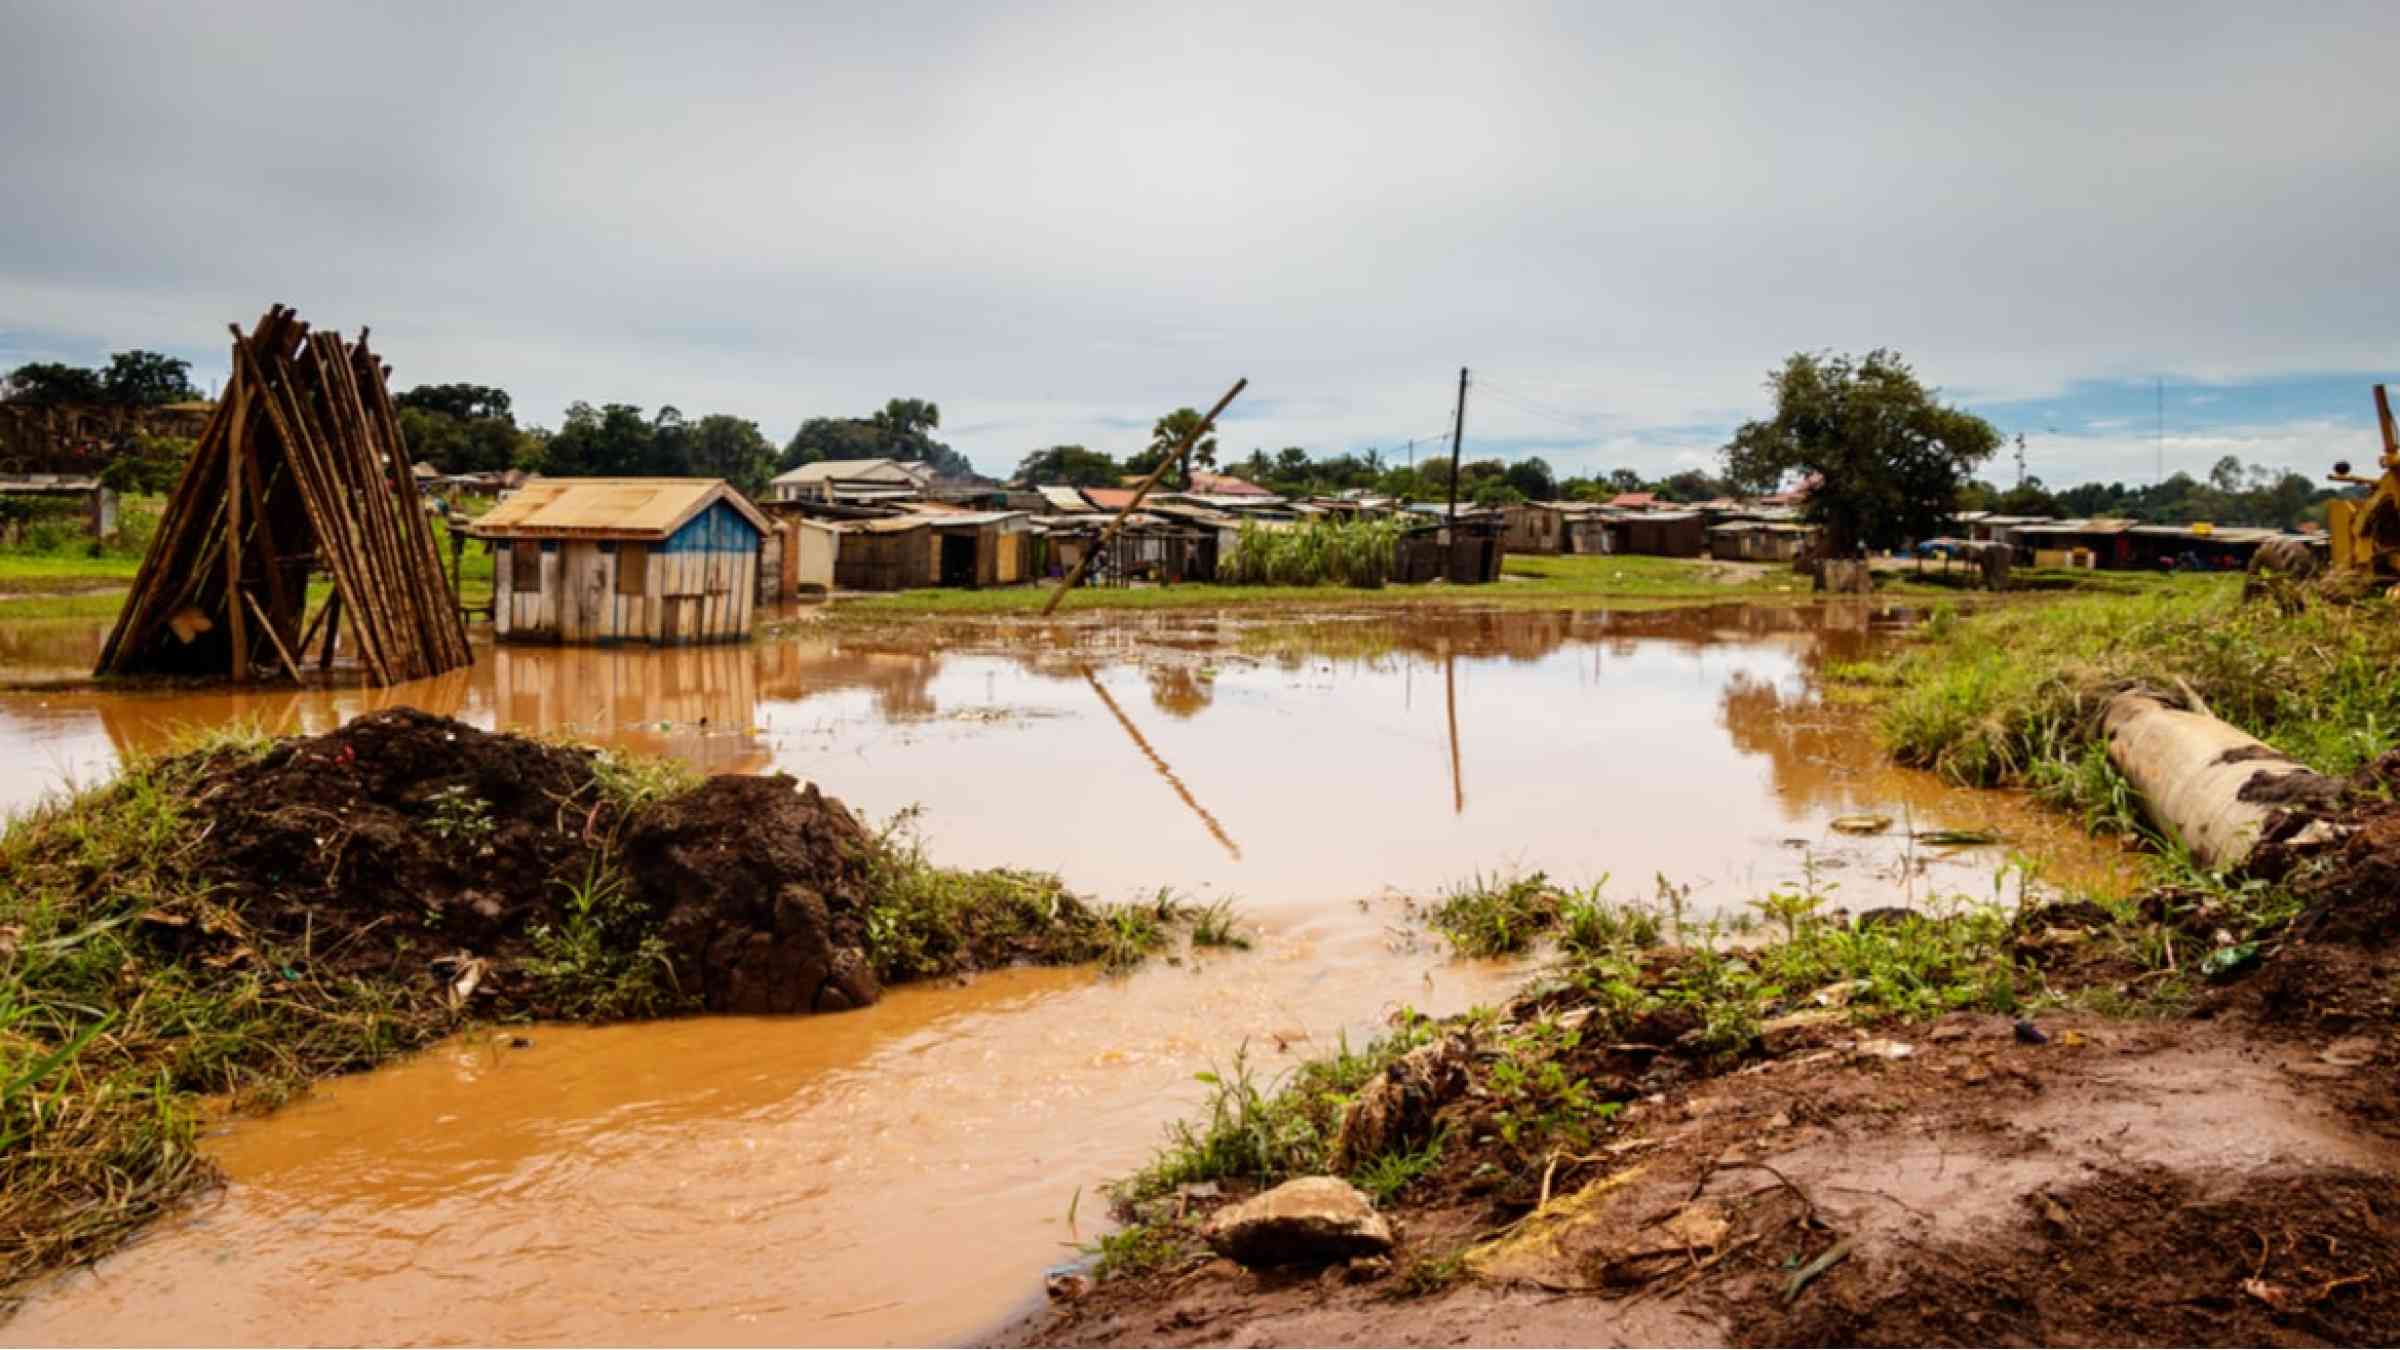 Rainy season in Lira Uganda. The complete village is flooding after this destructive rainfall.